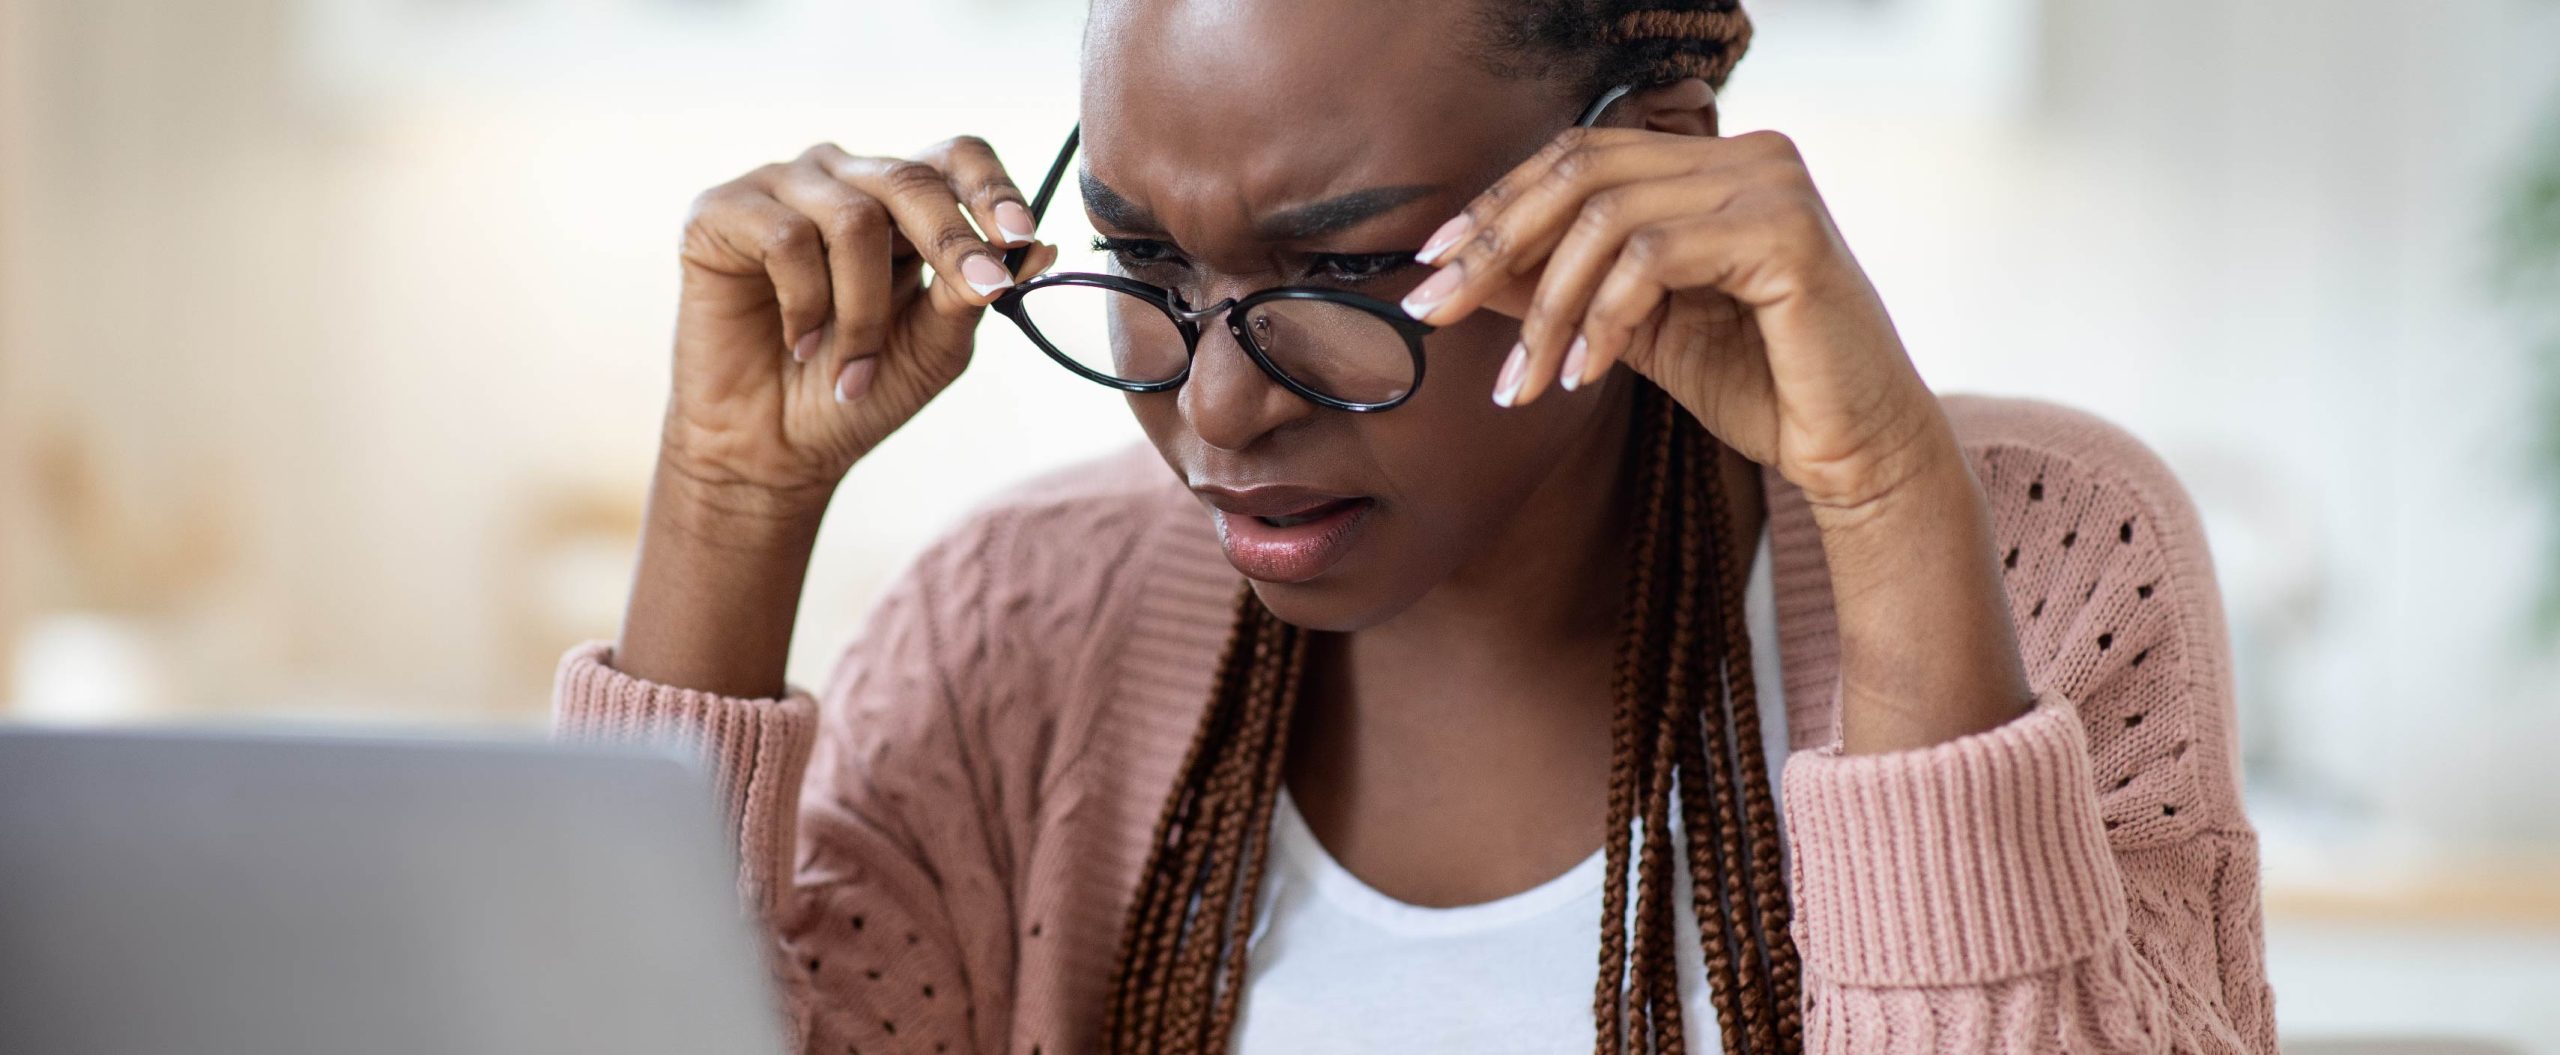 woman adjusting glasses